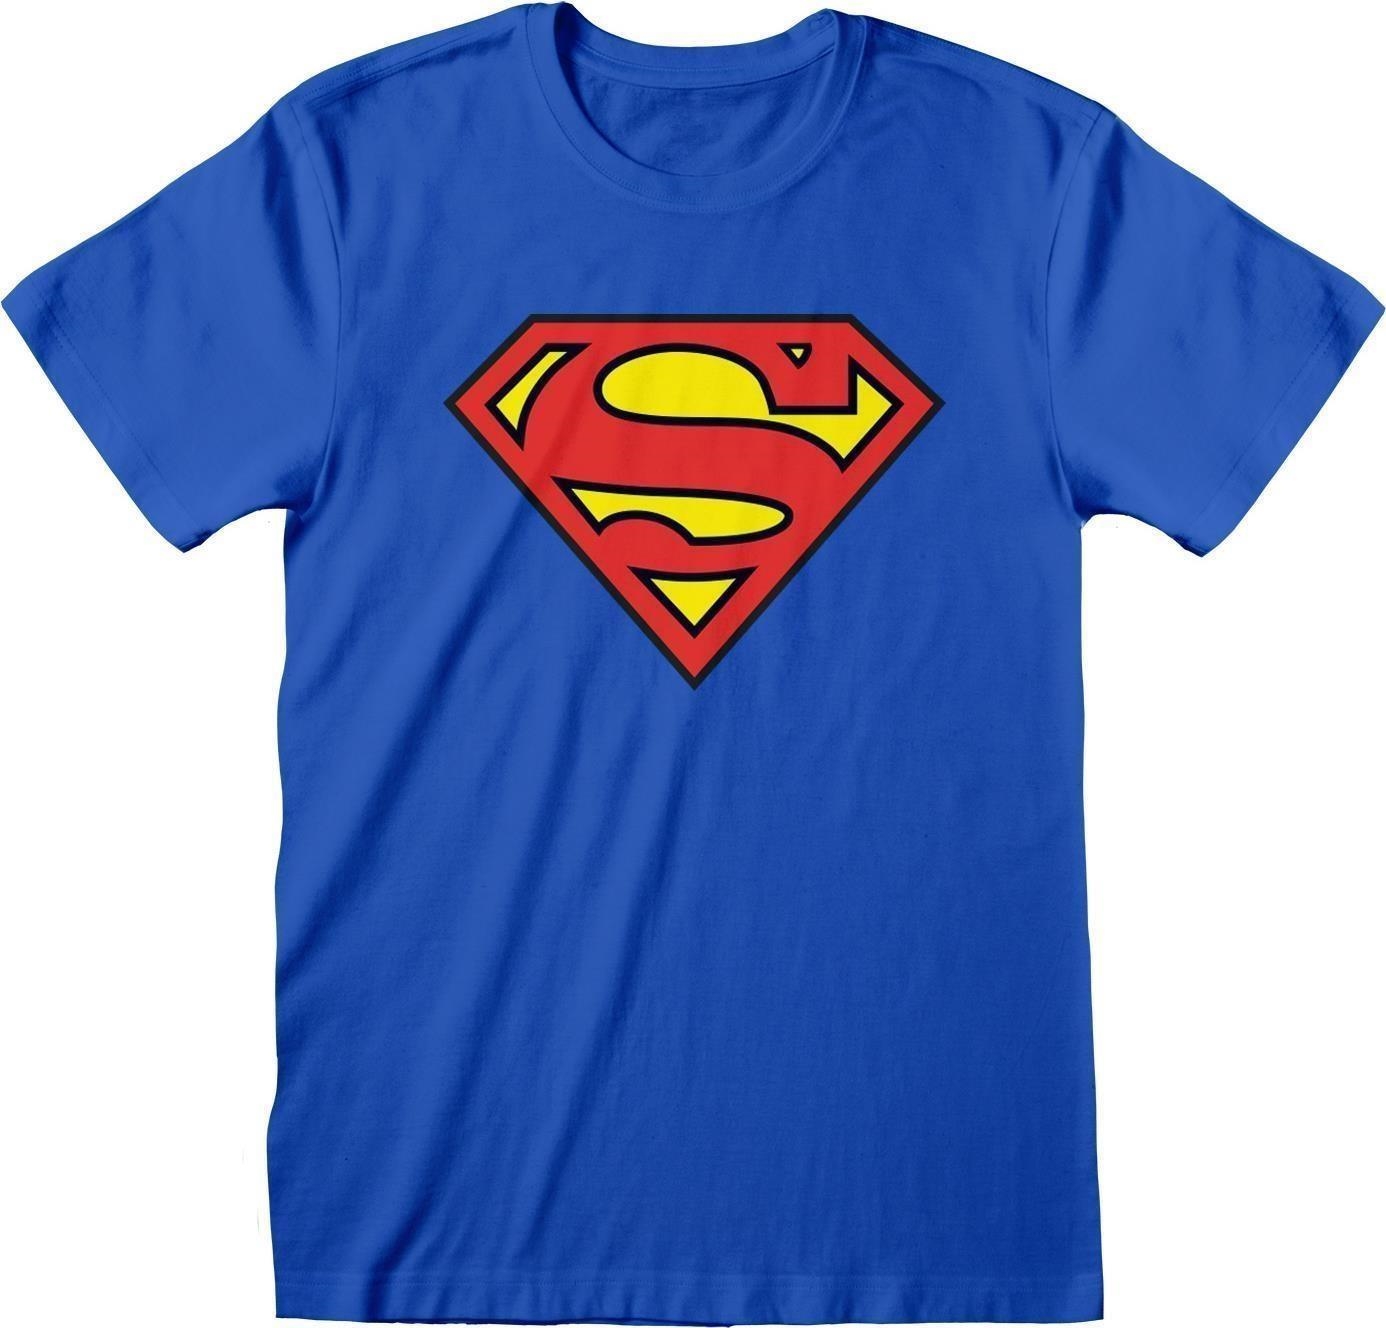 DC SUPERMAN - T-SHIRT - LOGO M